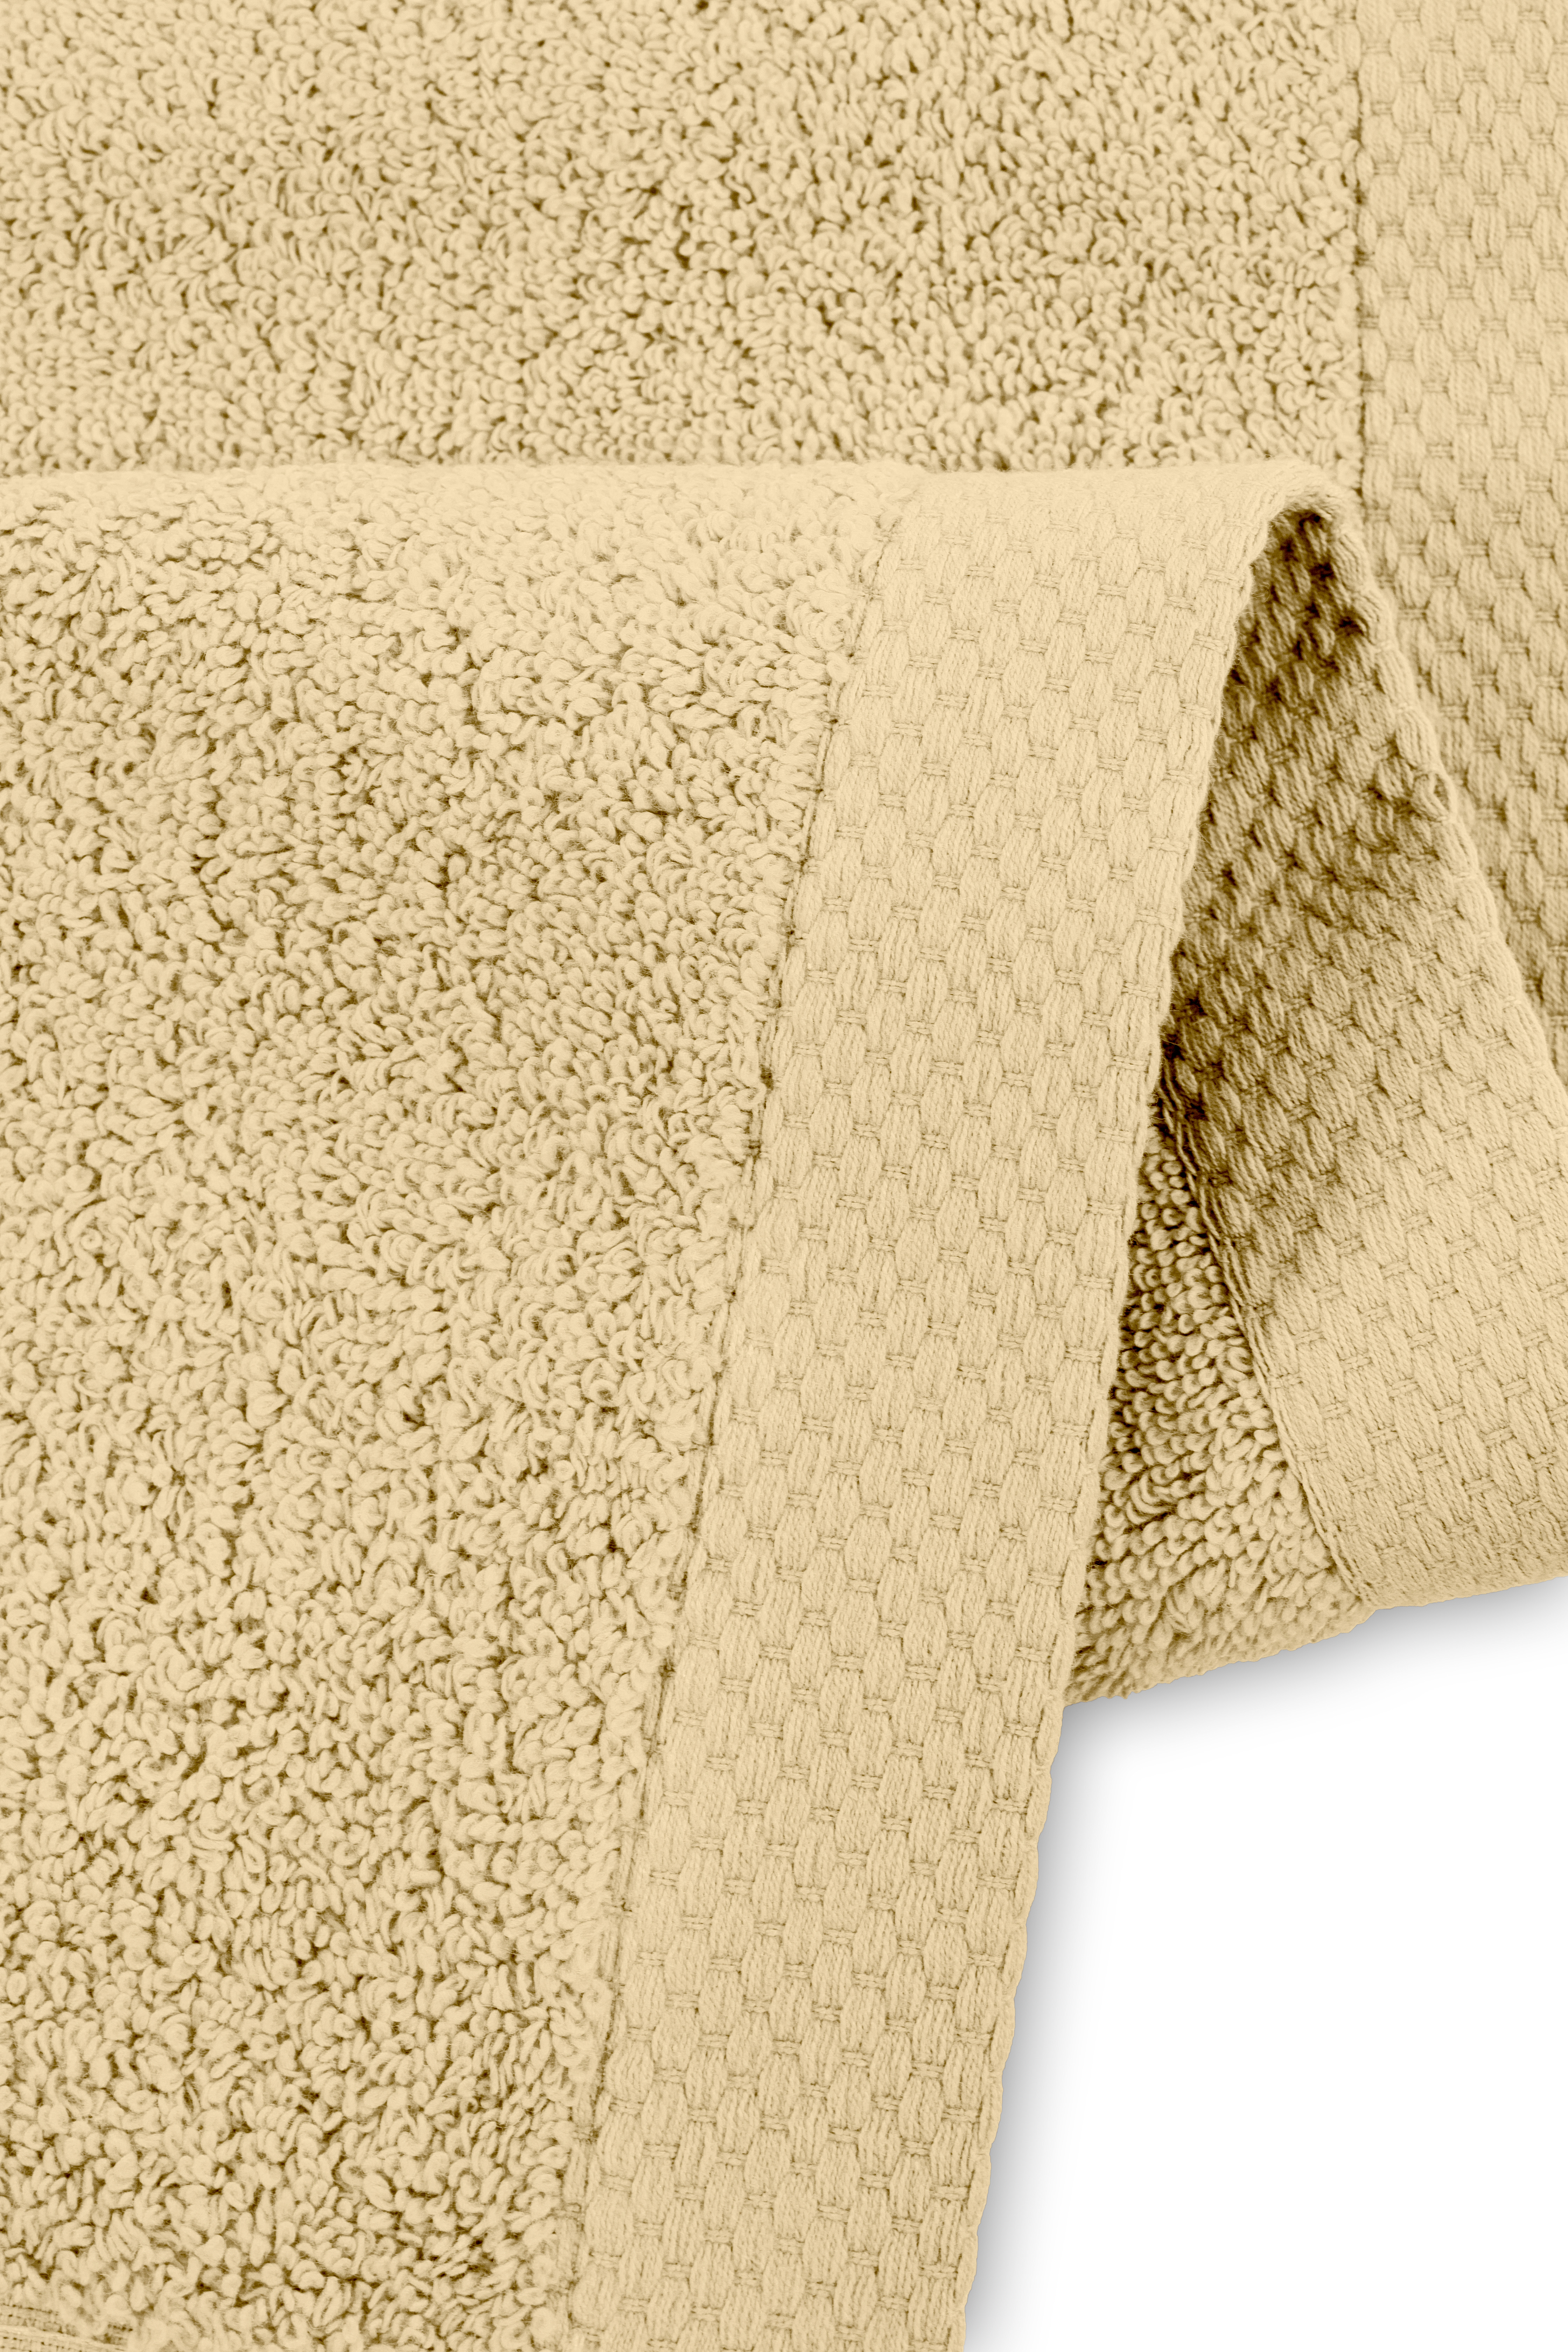 Shower towel DELUX 100x150cm, sand